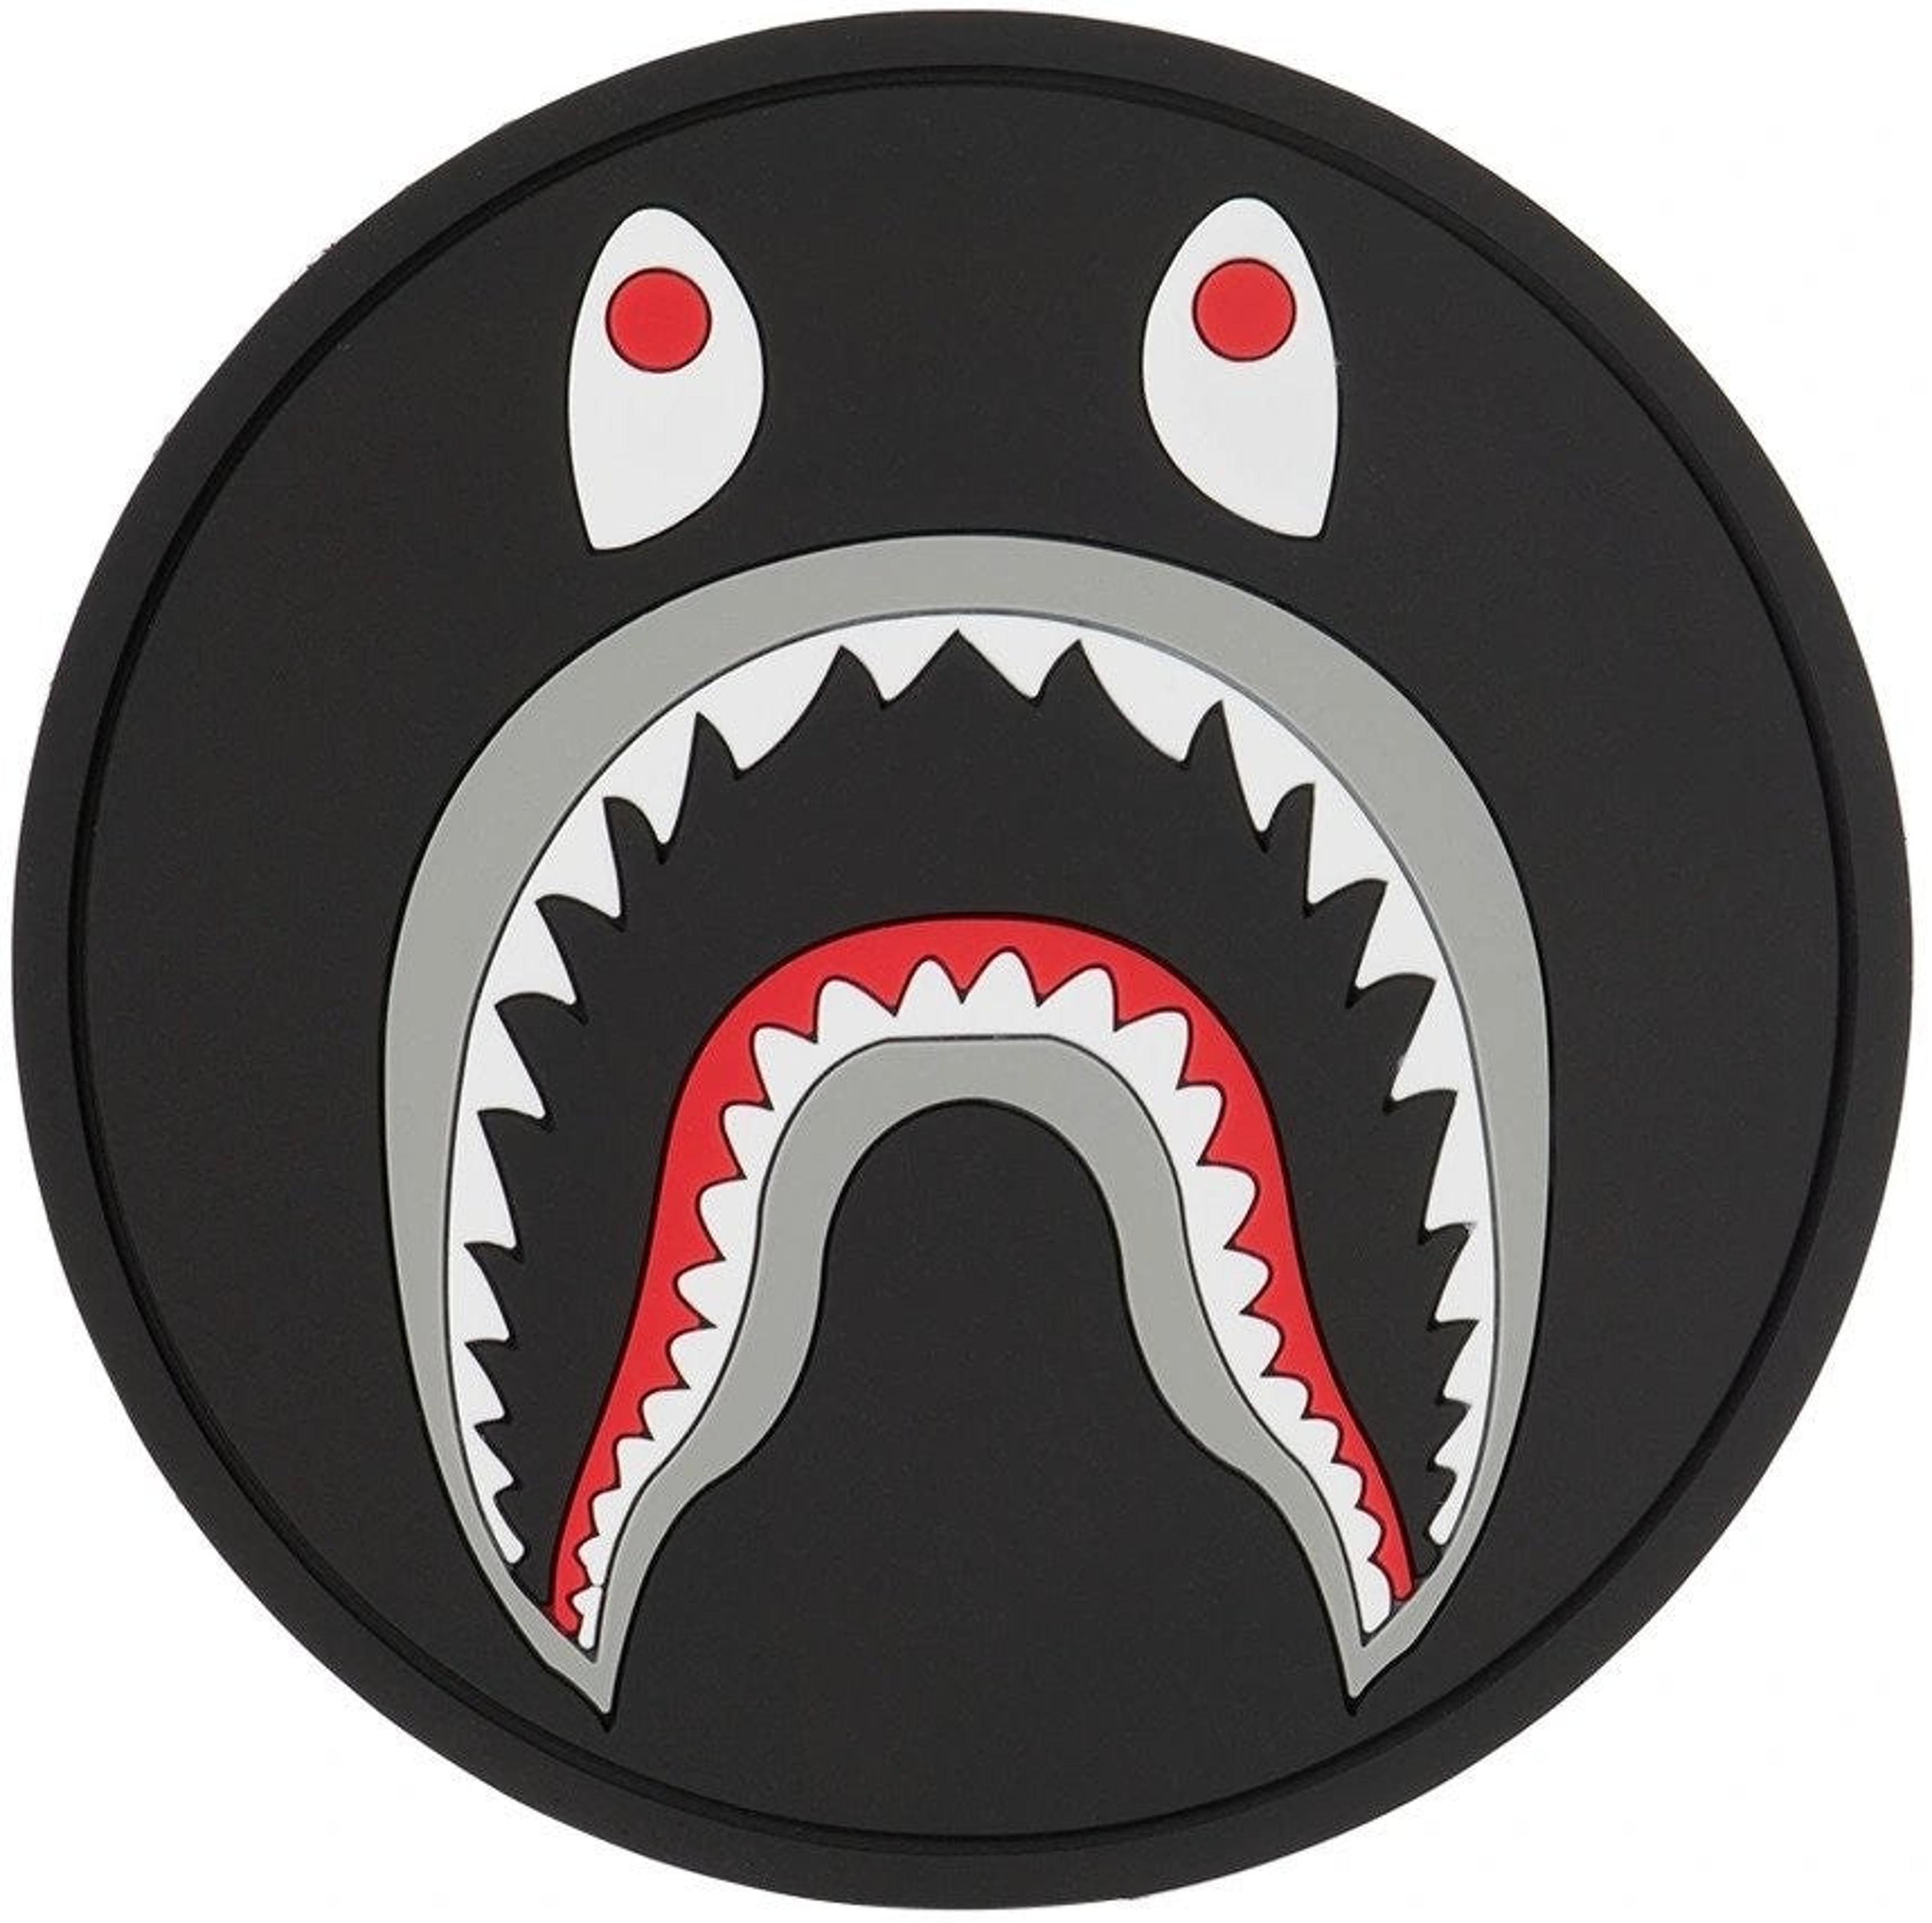 Bape Shark Rubber Coaster Black